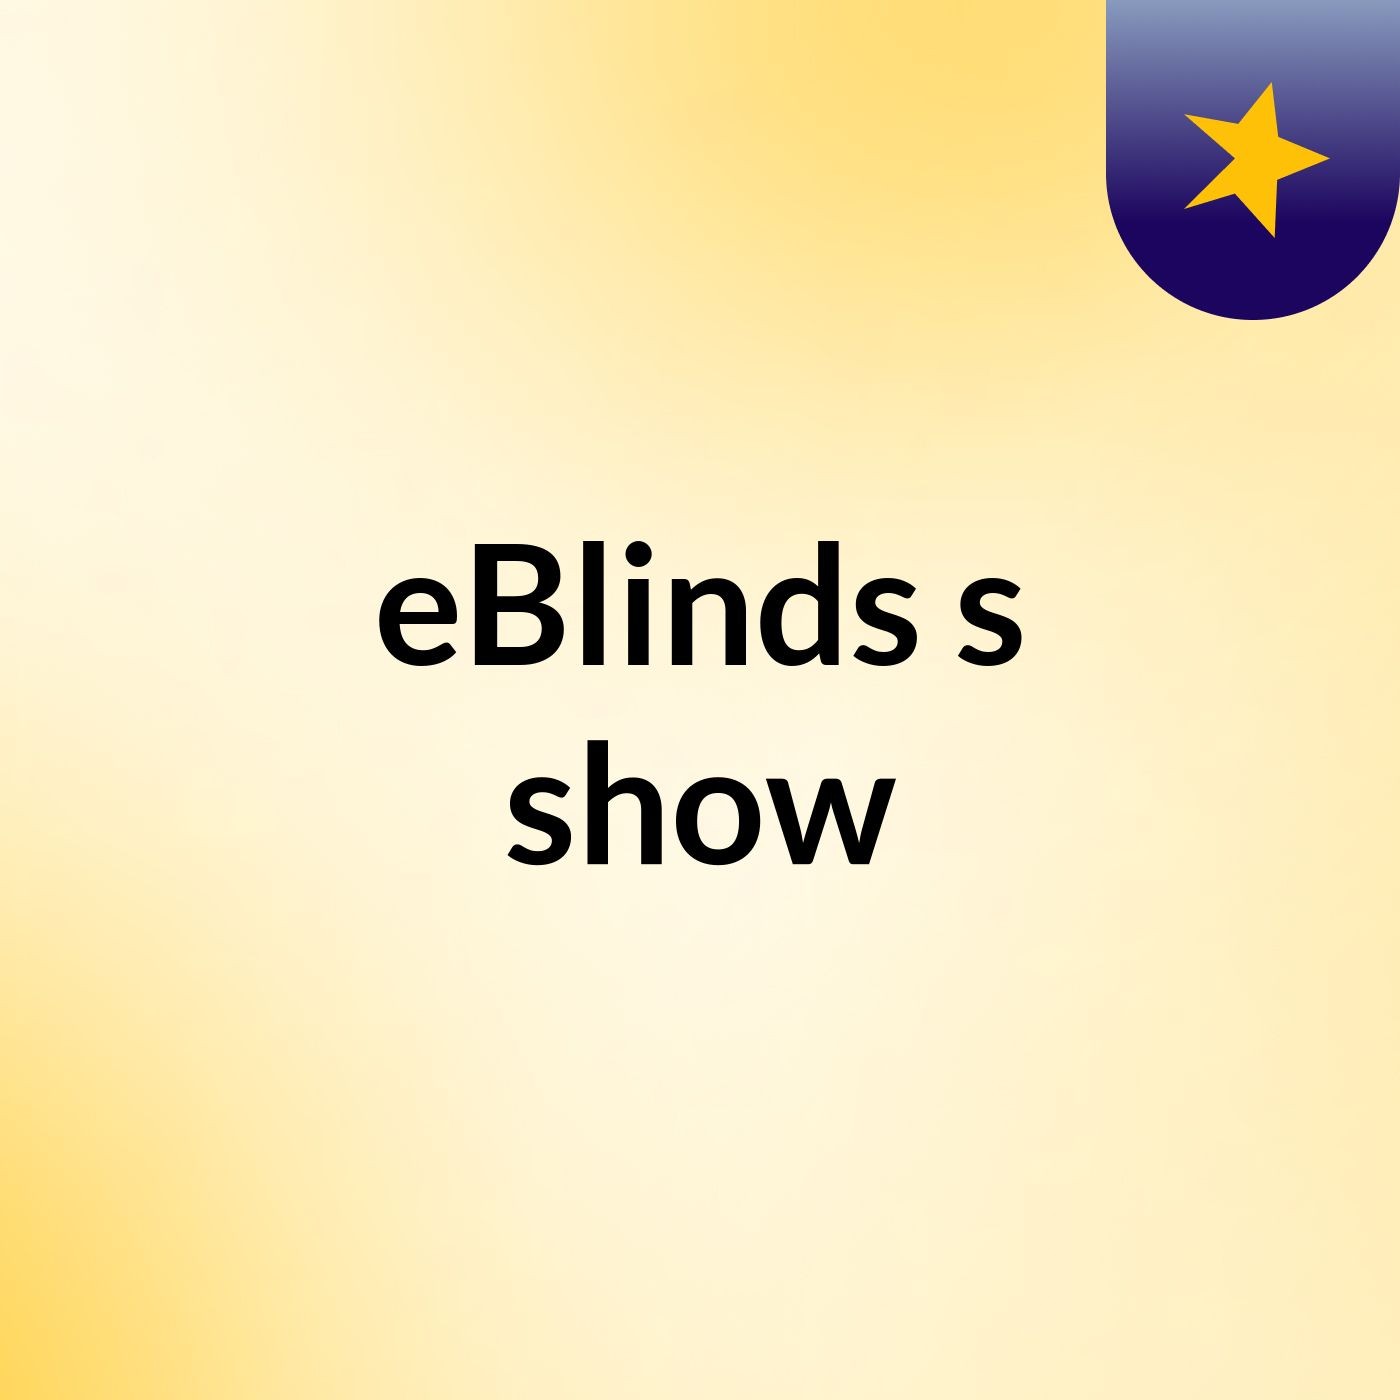 eBlinds's show